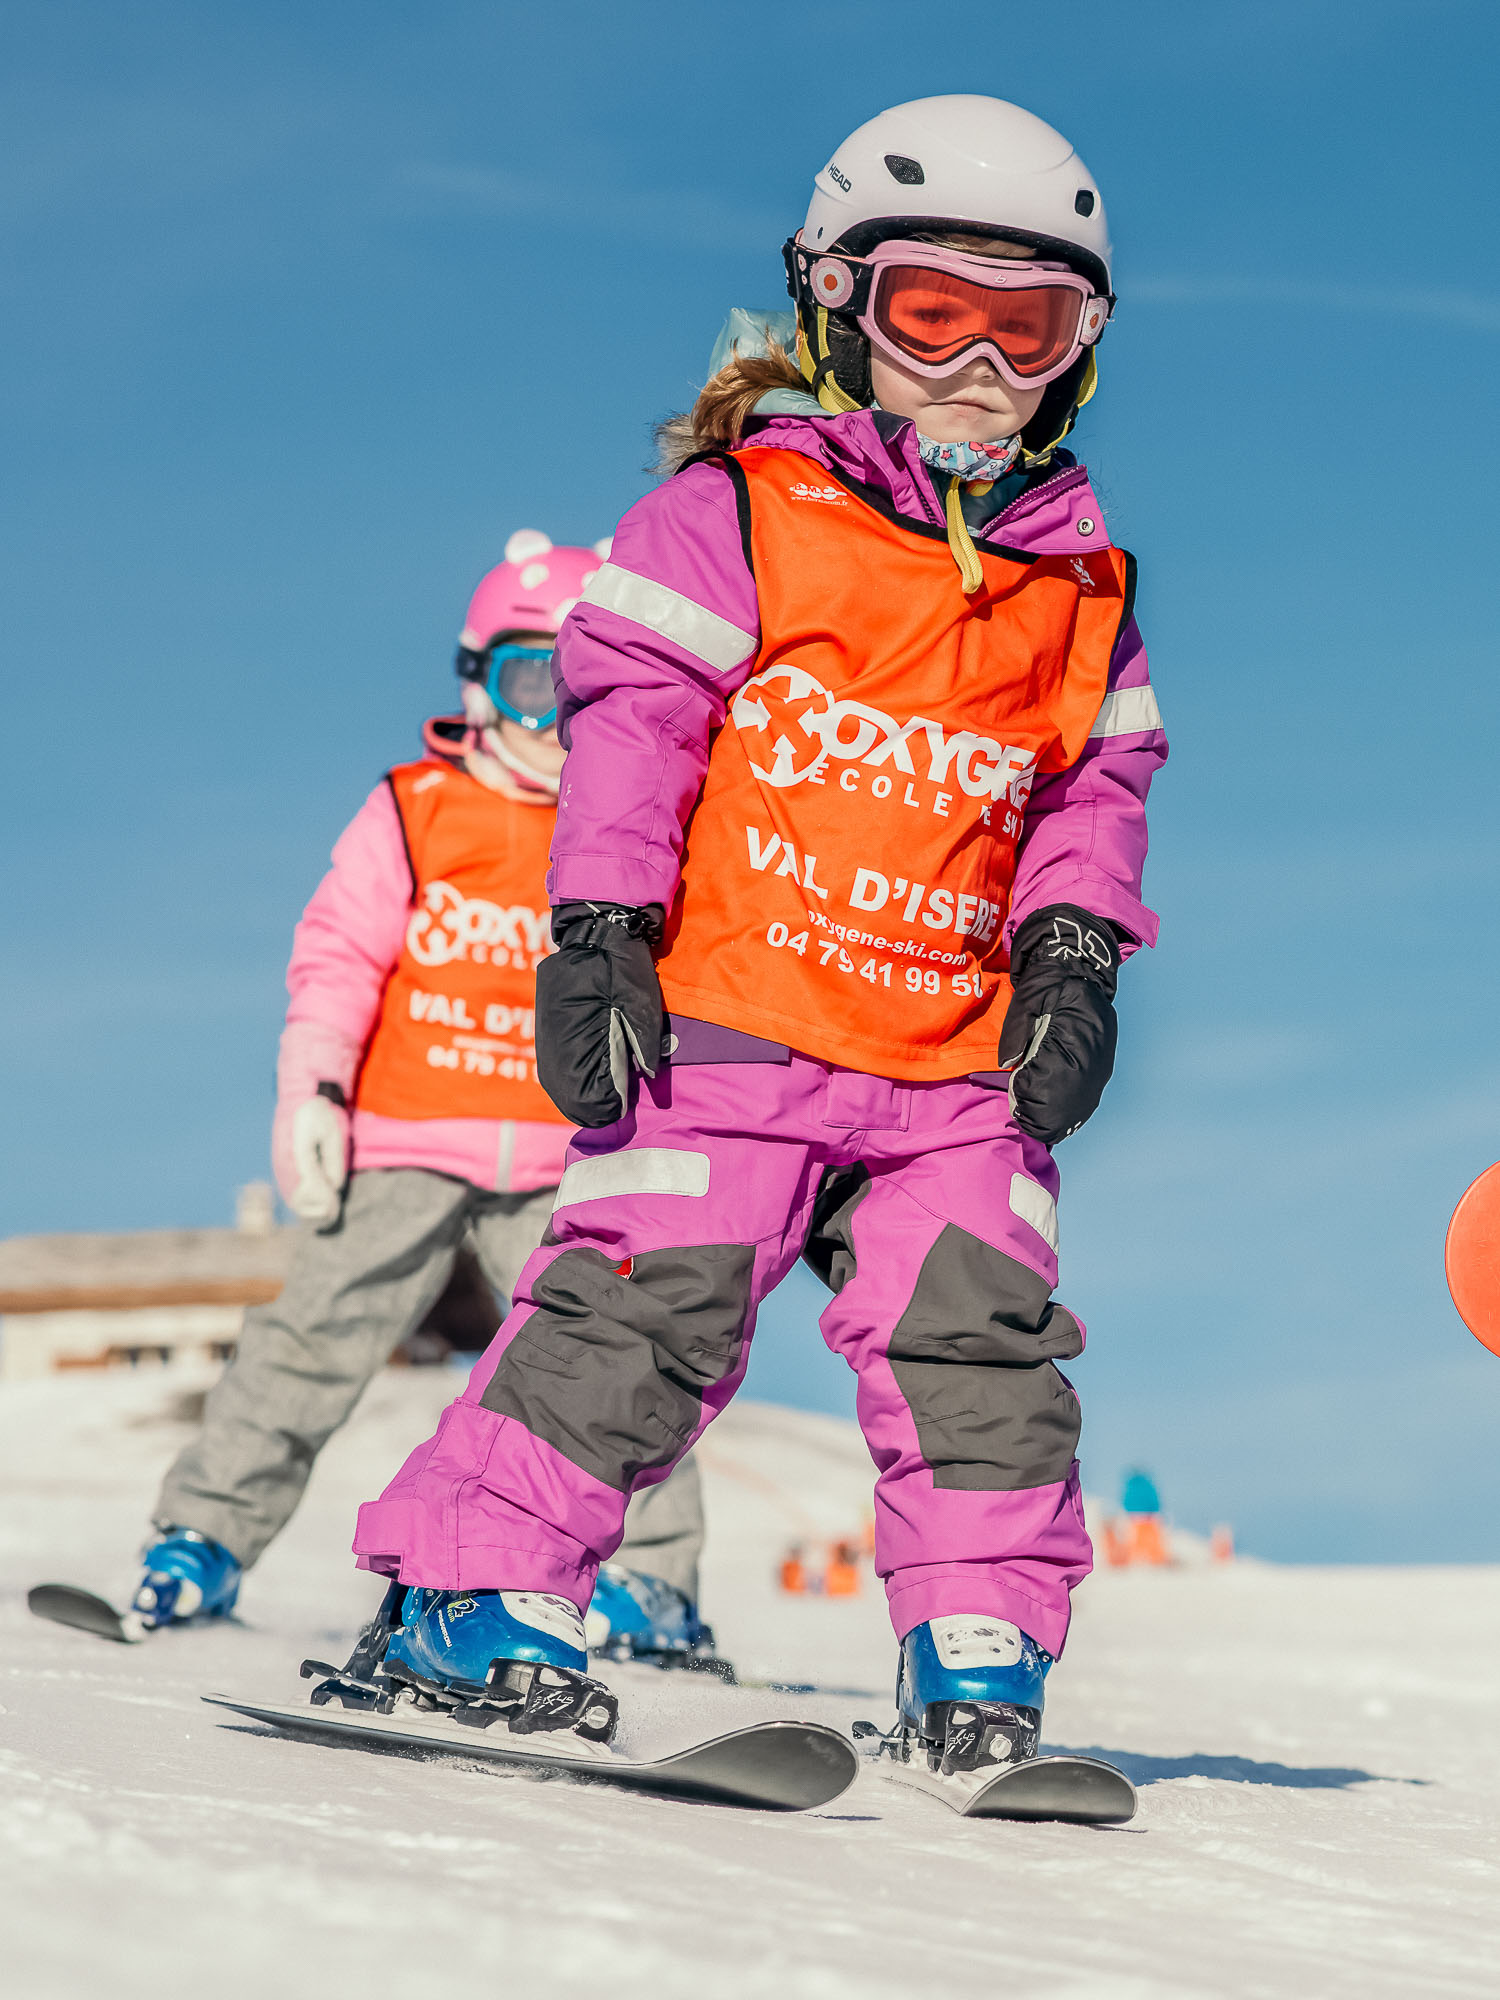 https://www.oxygene.ski/wp-content/uploads/2017/03/oxygene-ski-snowboard-school-children-ski-lesson-OXY2016HD-75-edit-1500-2000.jpg